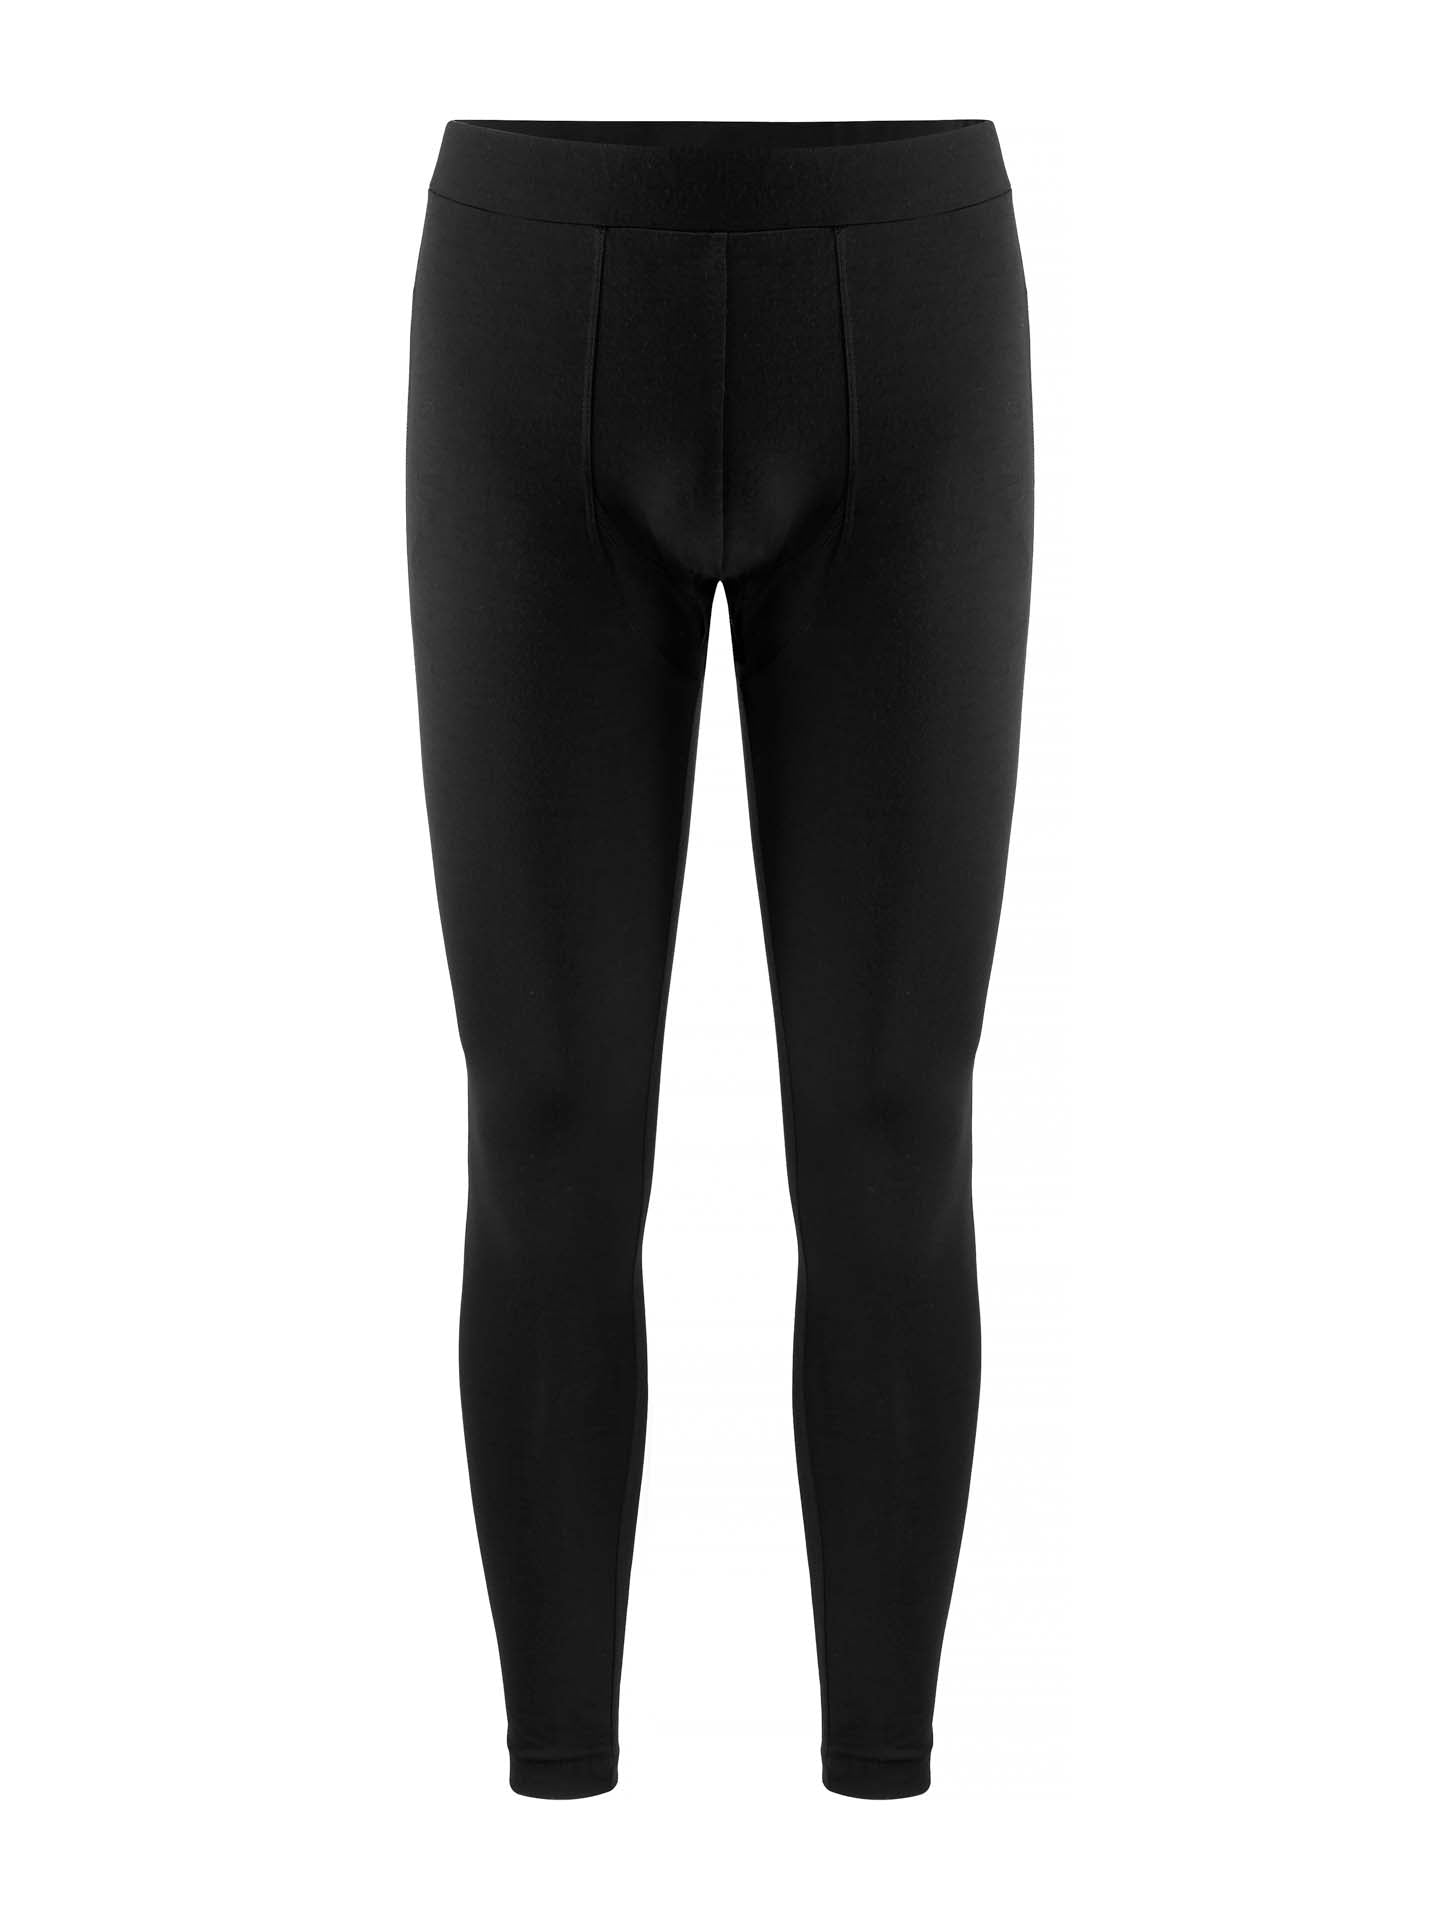 Men's seamless thermal underwear with Merino wool (top) - black